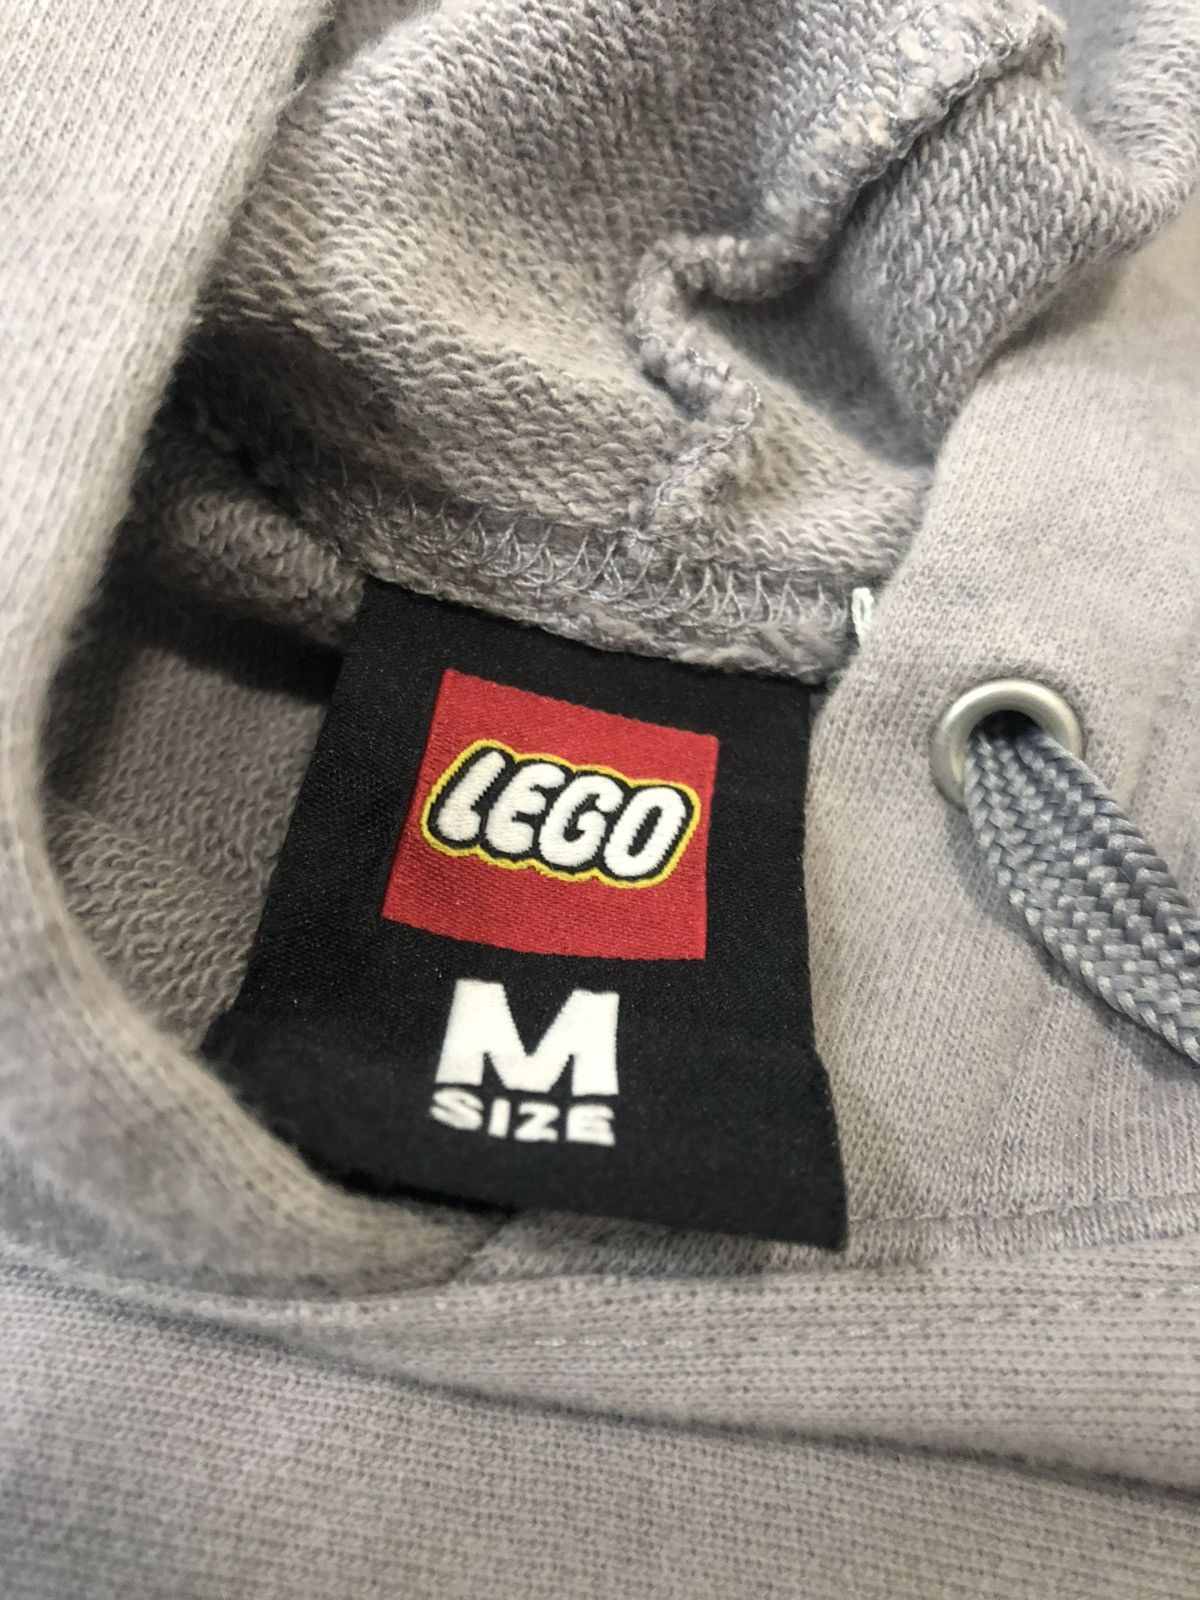 Lego Lego hoodie sweatshirt Size US M / EU 48-50 / 2 - 9 Thumbnail